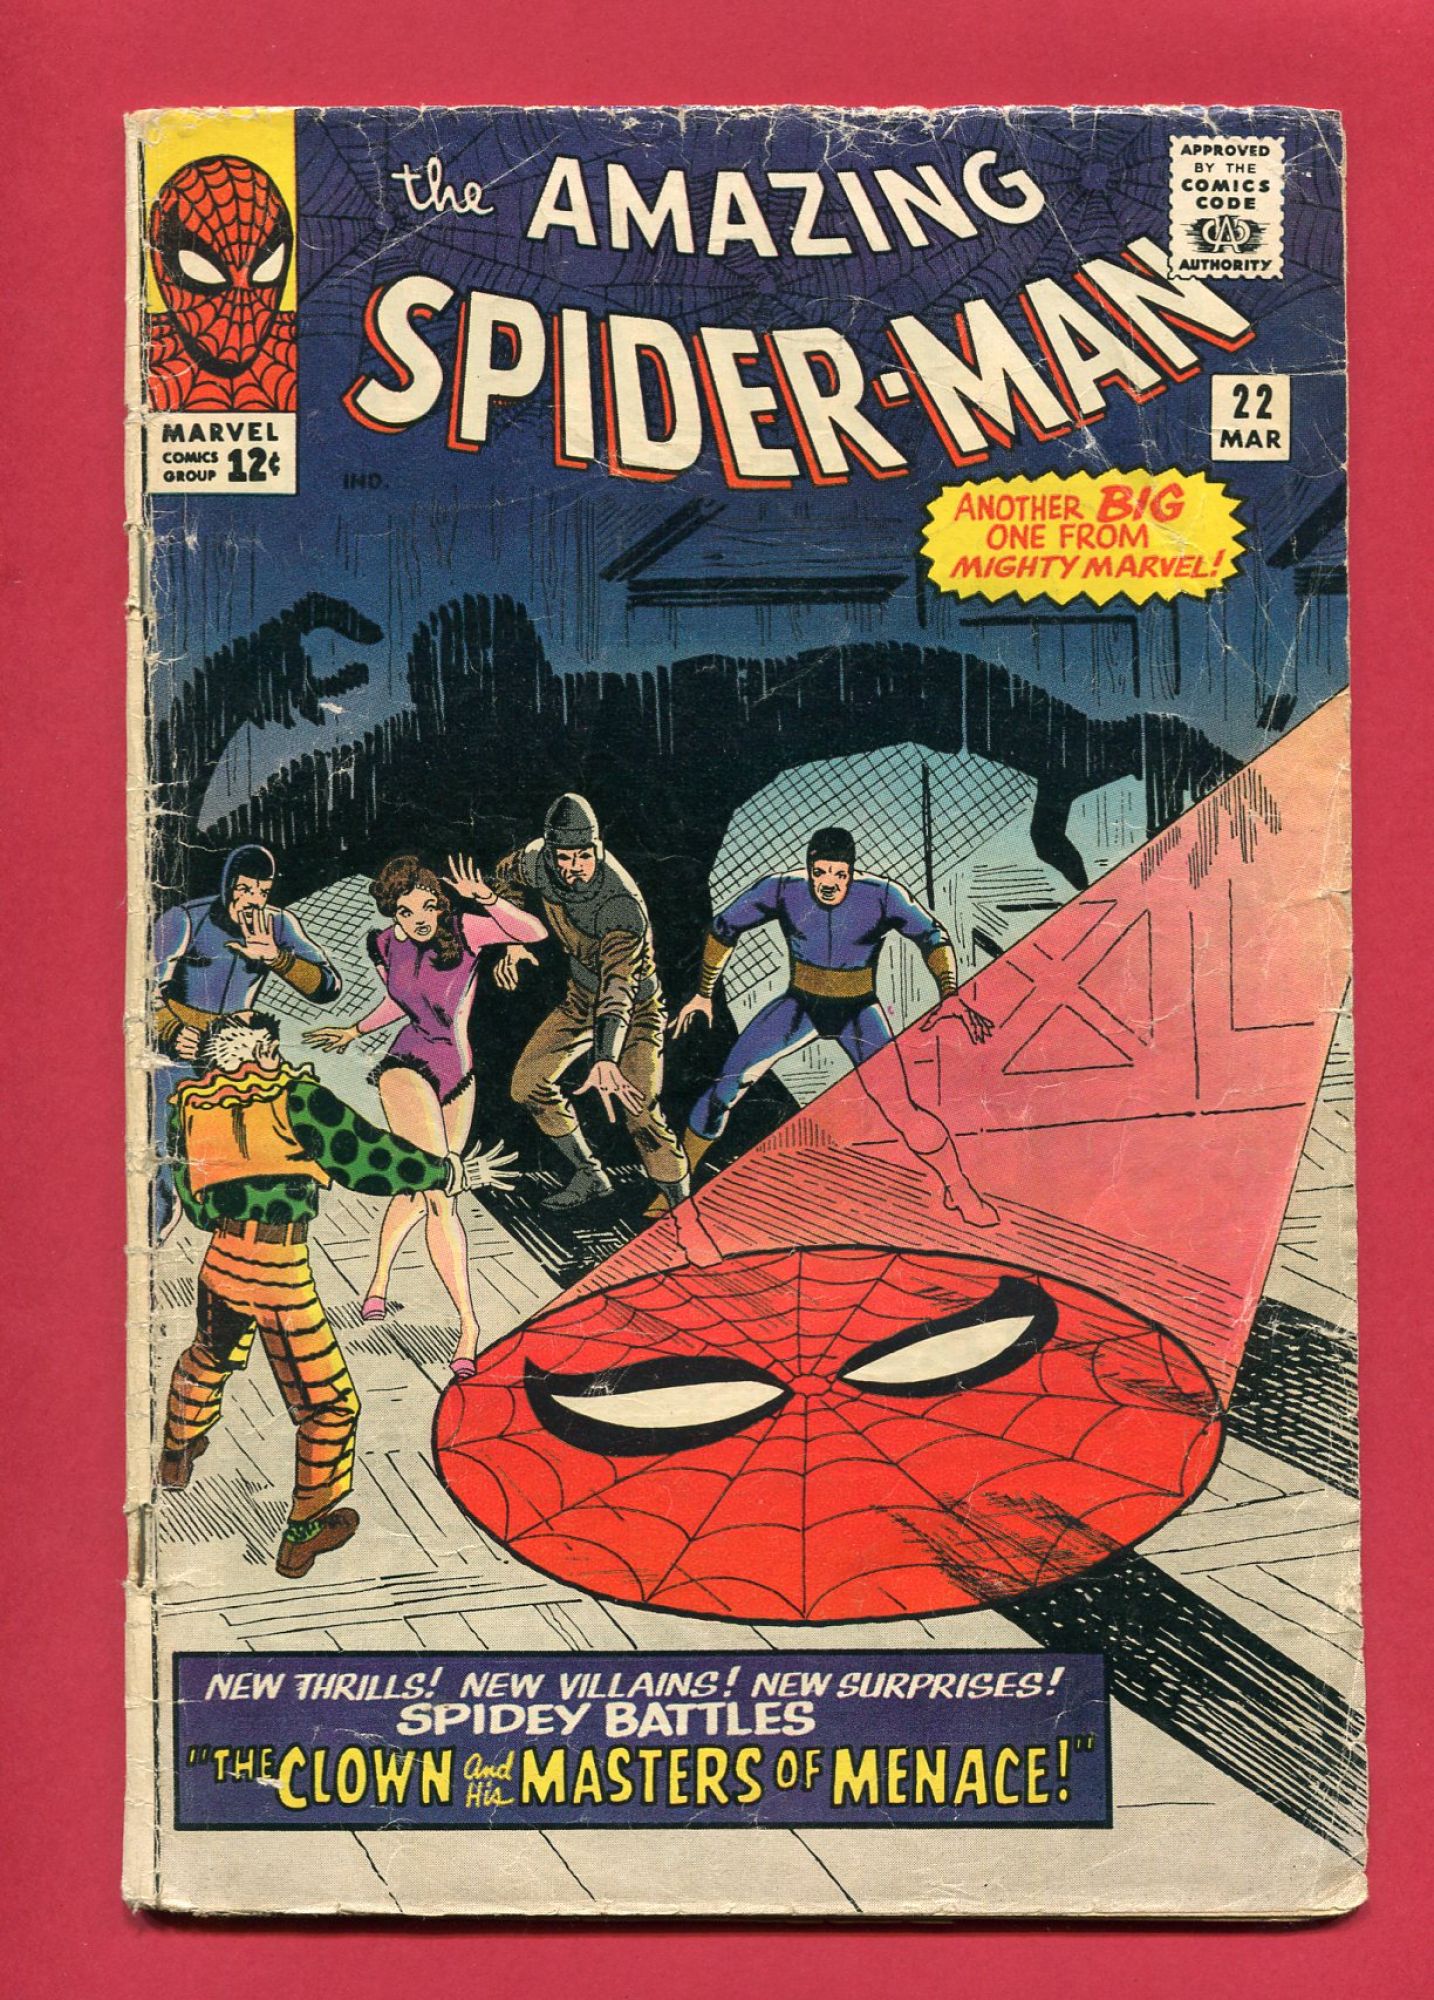 Amazing Spider-Man #22, Mar 1965, 2.0 GD